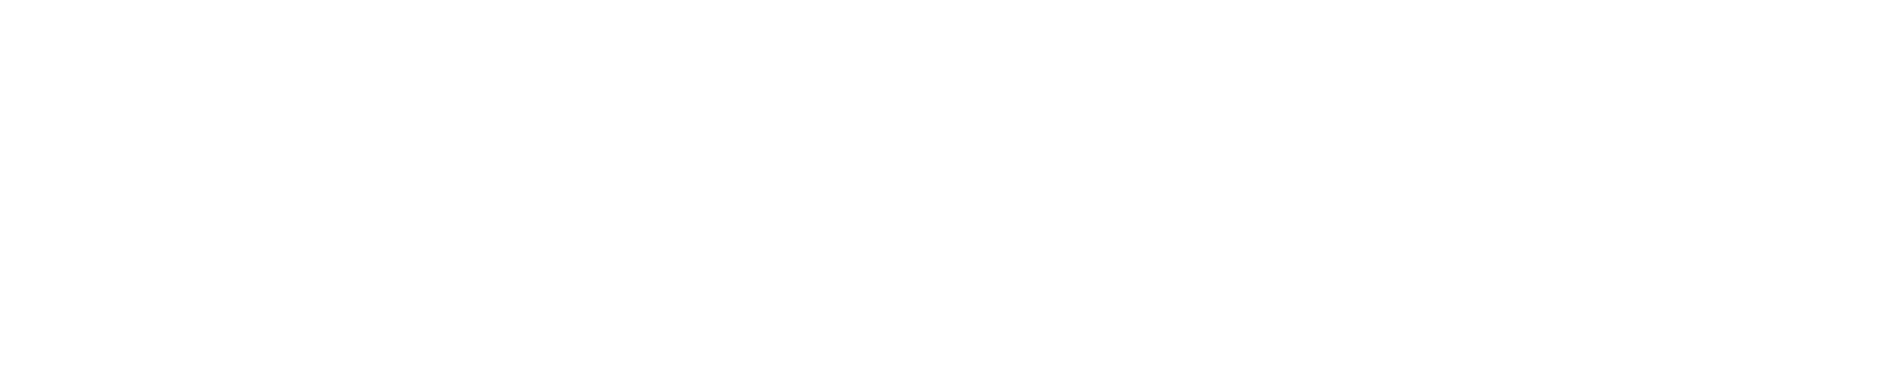 samplesapp-logo